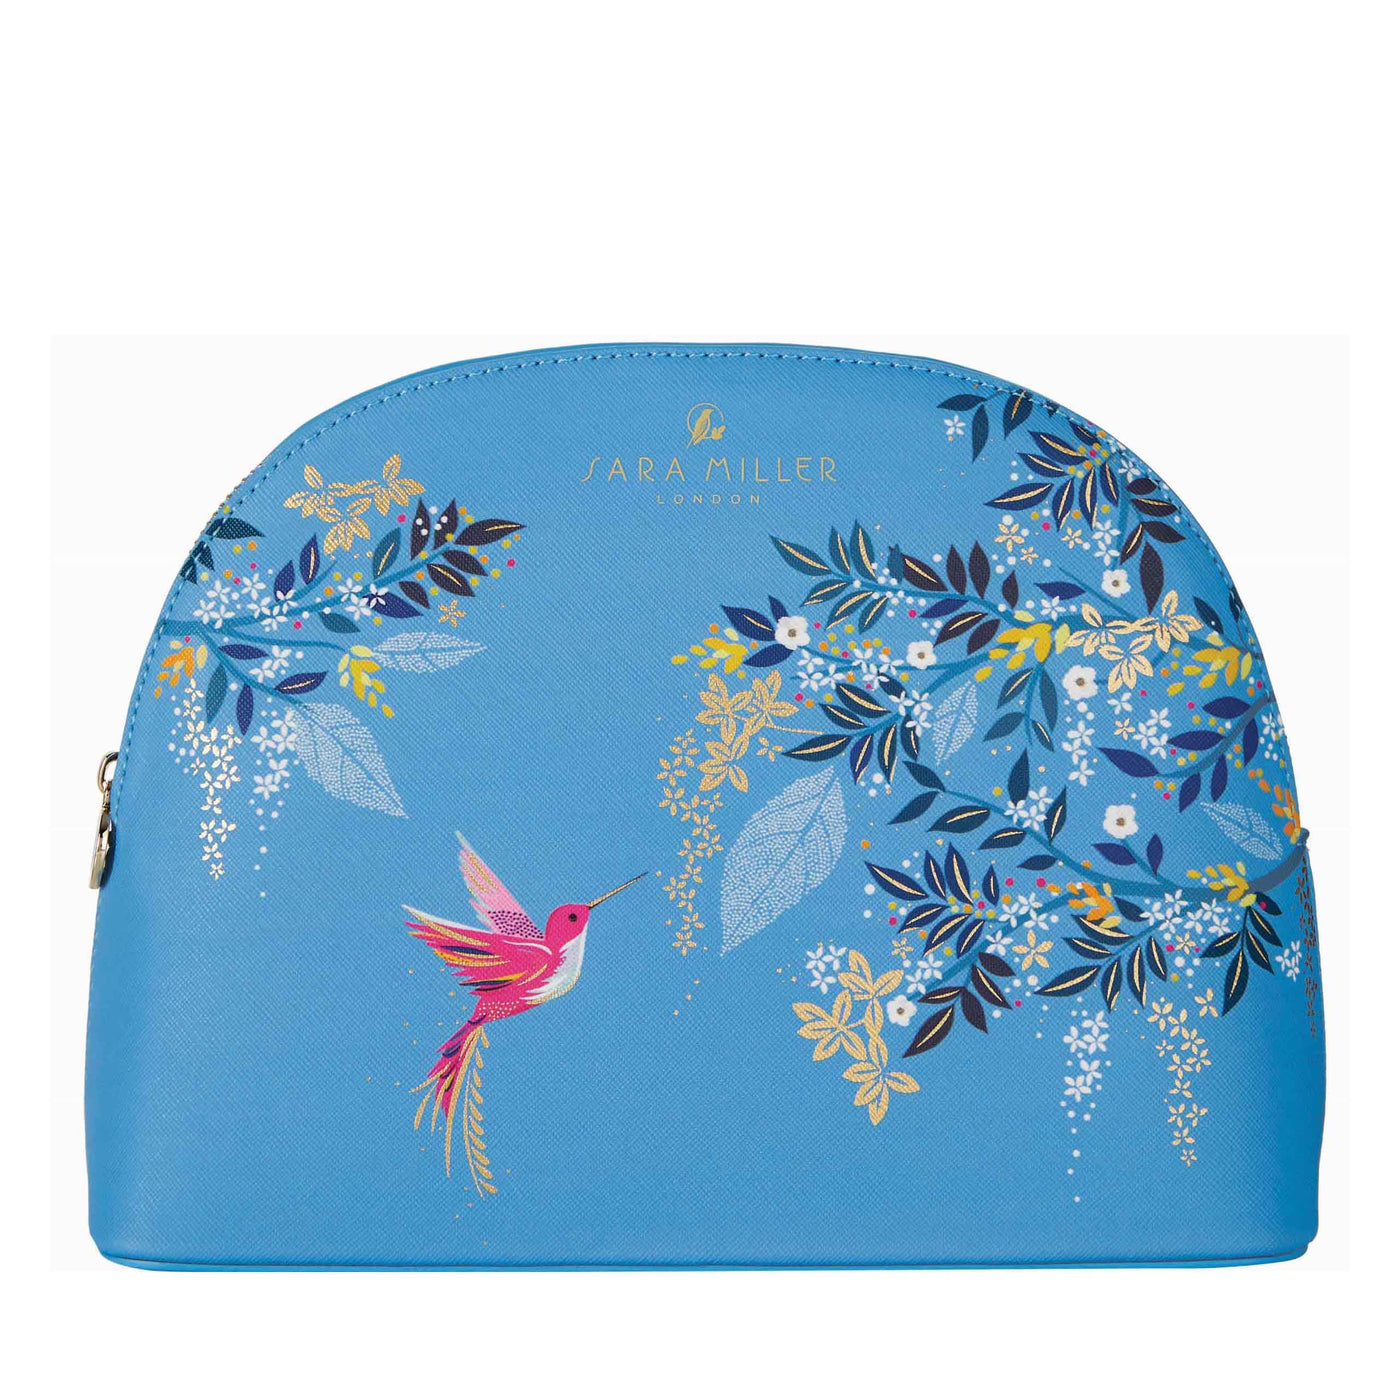 Sara Miller Large Blue Bird Cosmetic Bag - Heathcote & Ivory